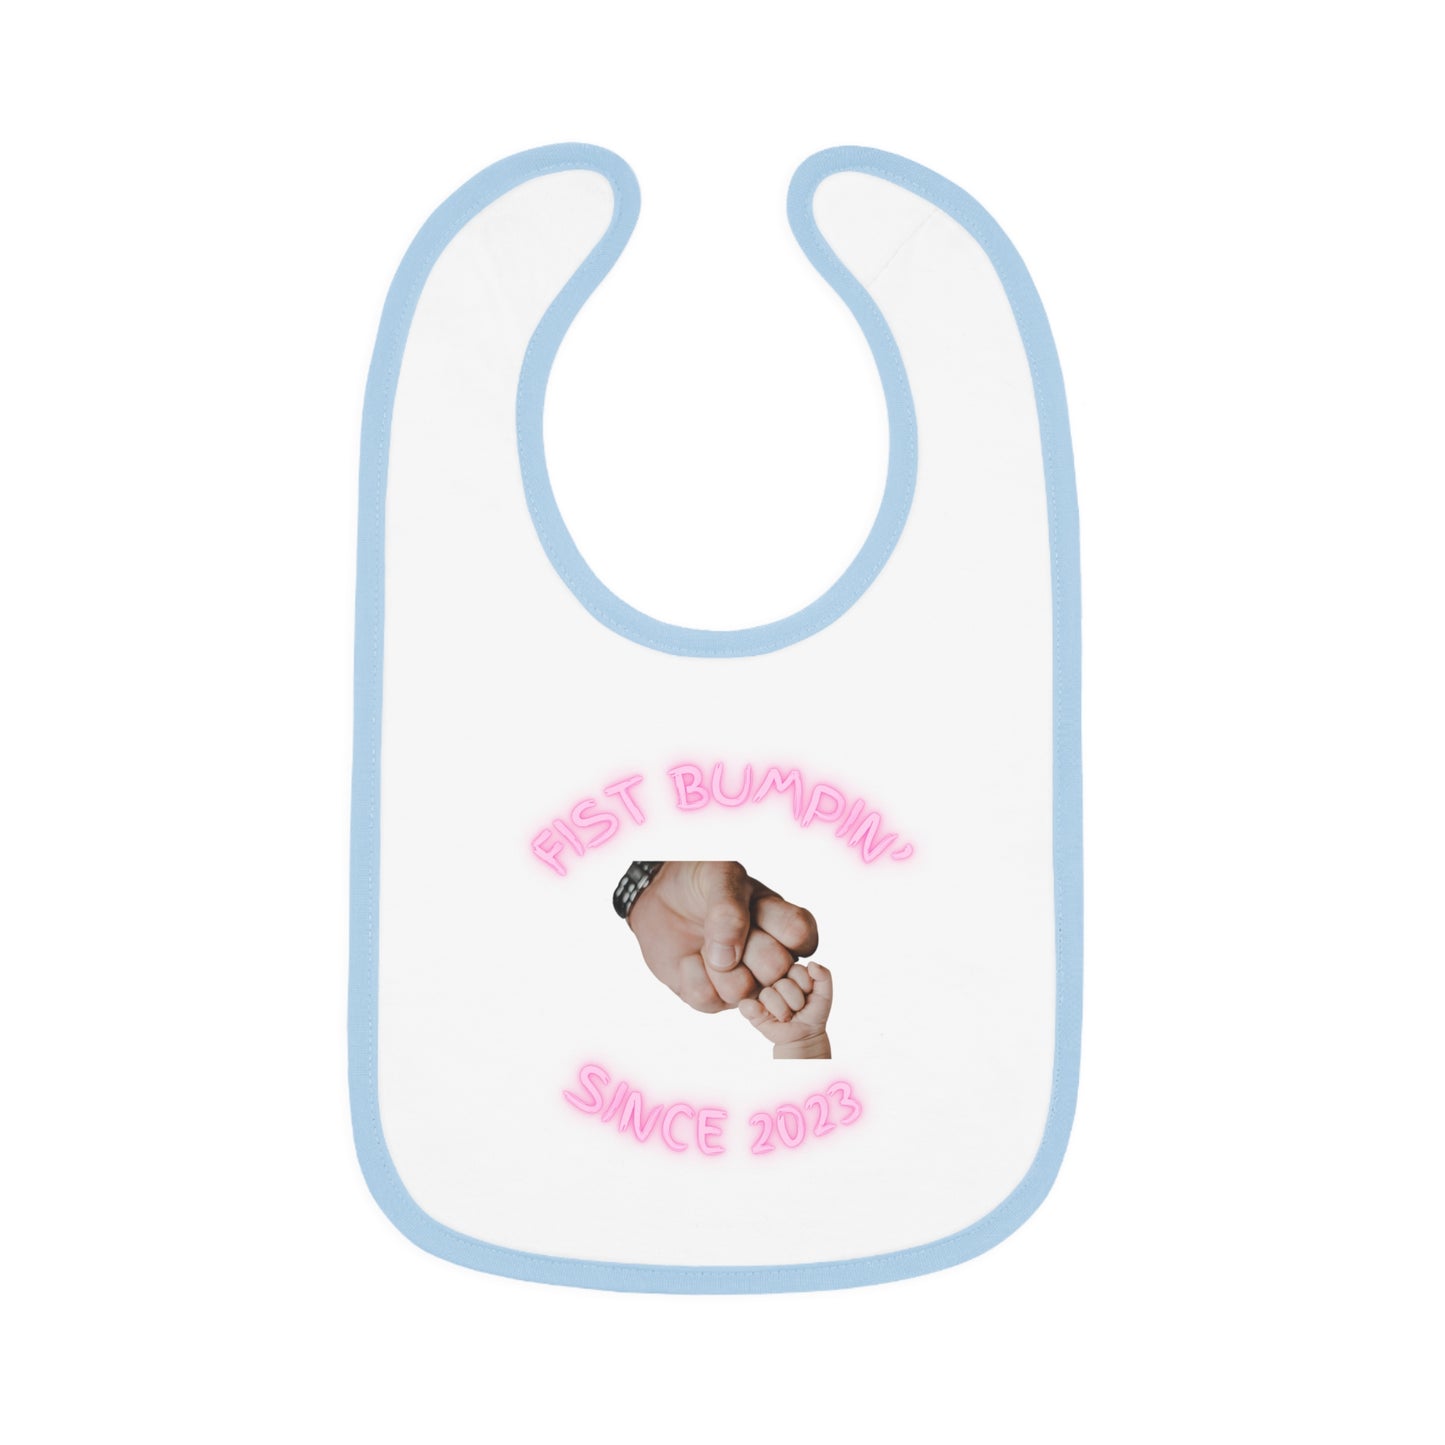 Baby Girl Pink Fist Bumpin’ Since 2023 Baby Contrast Trim Jersey Bib